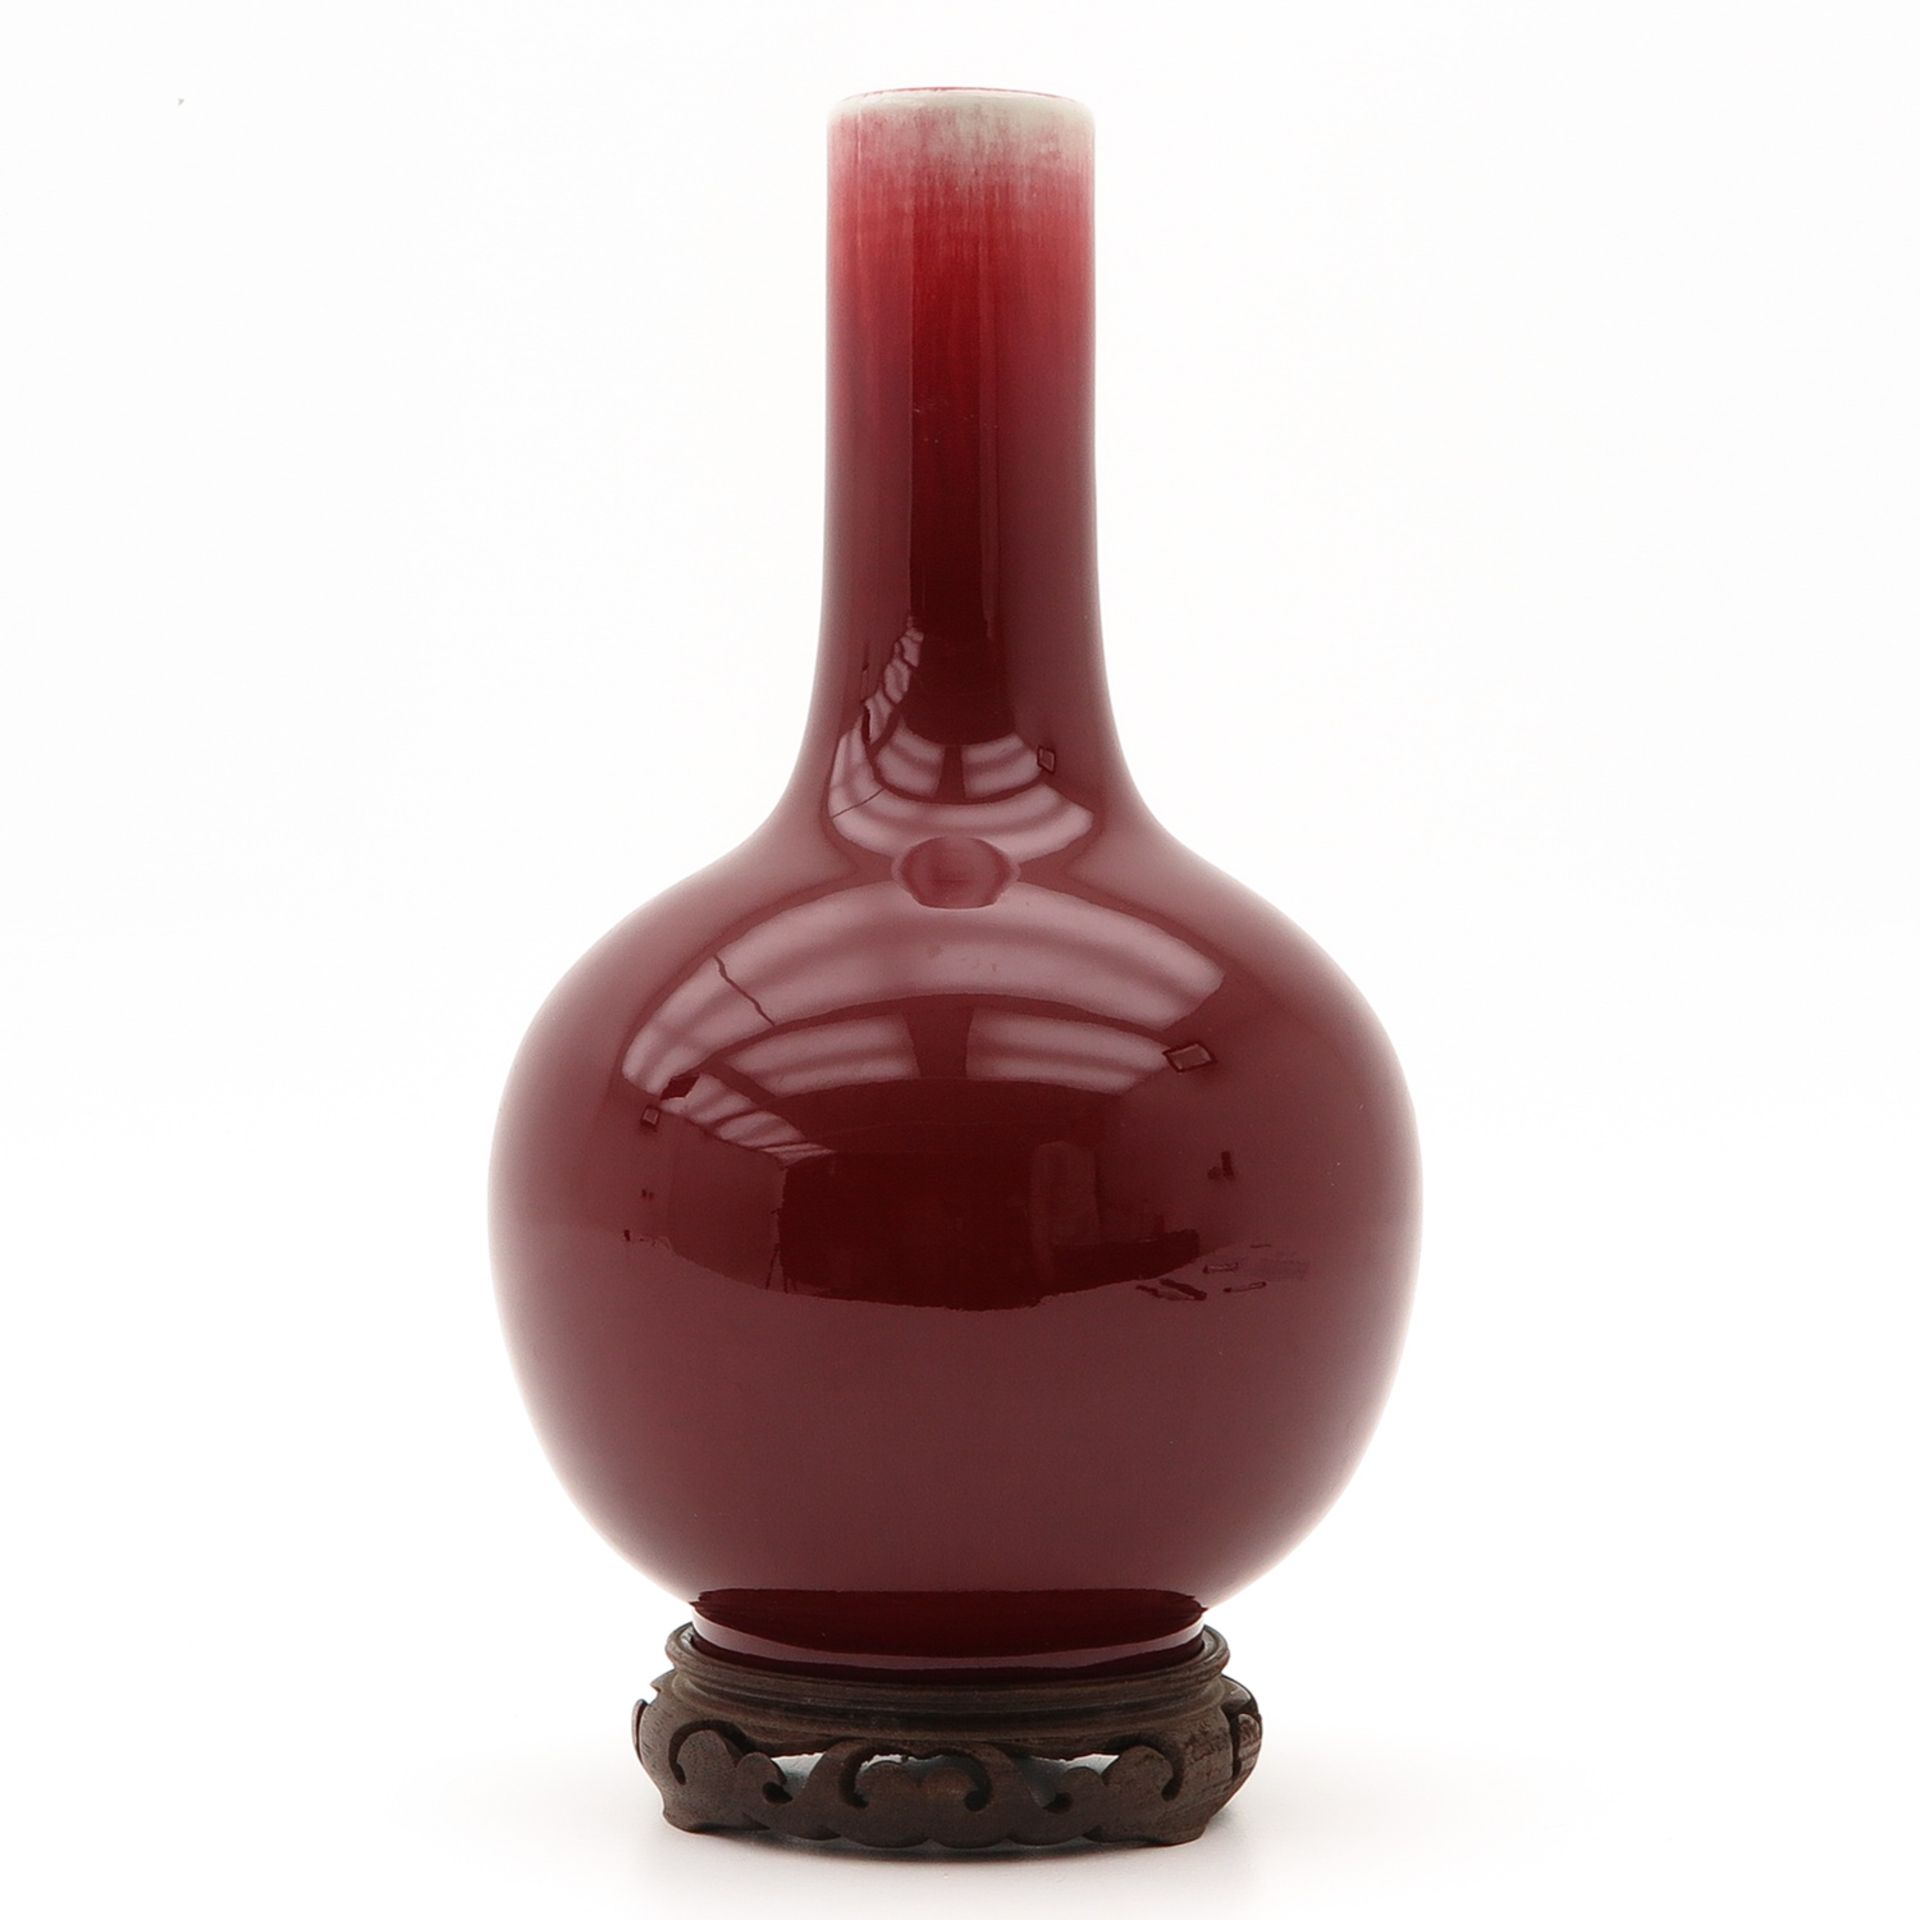 A Sang de Boeuf Vase - Image 4 of 9